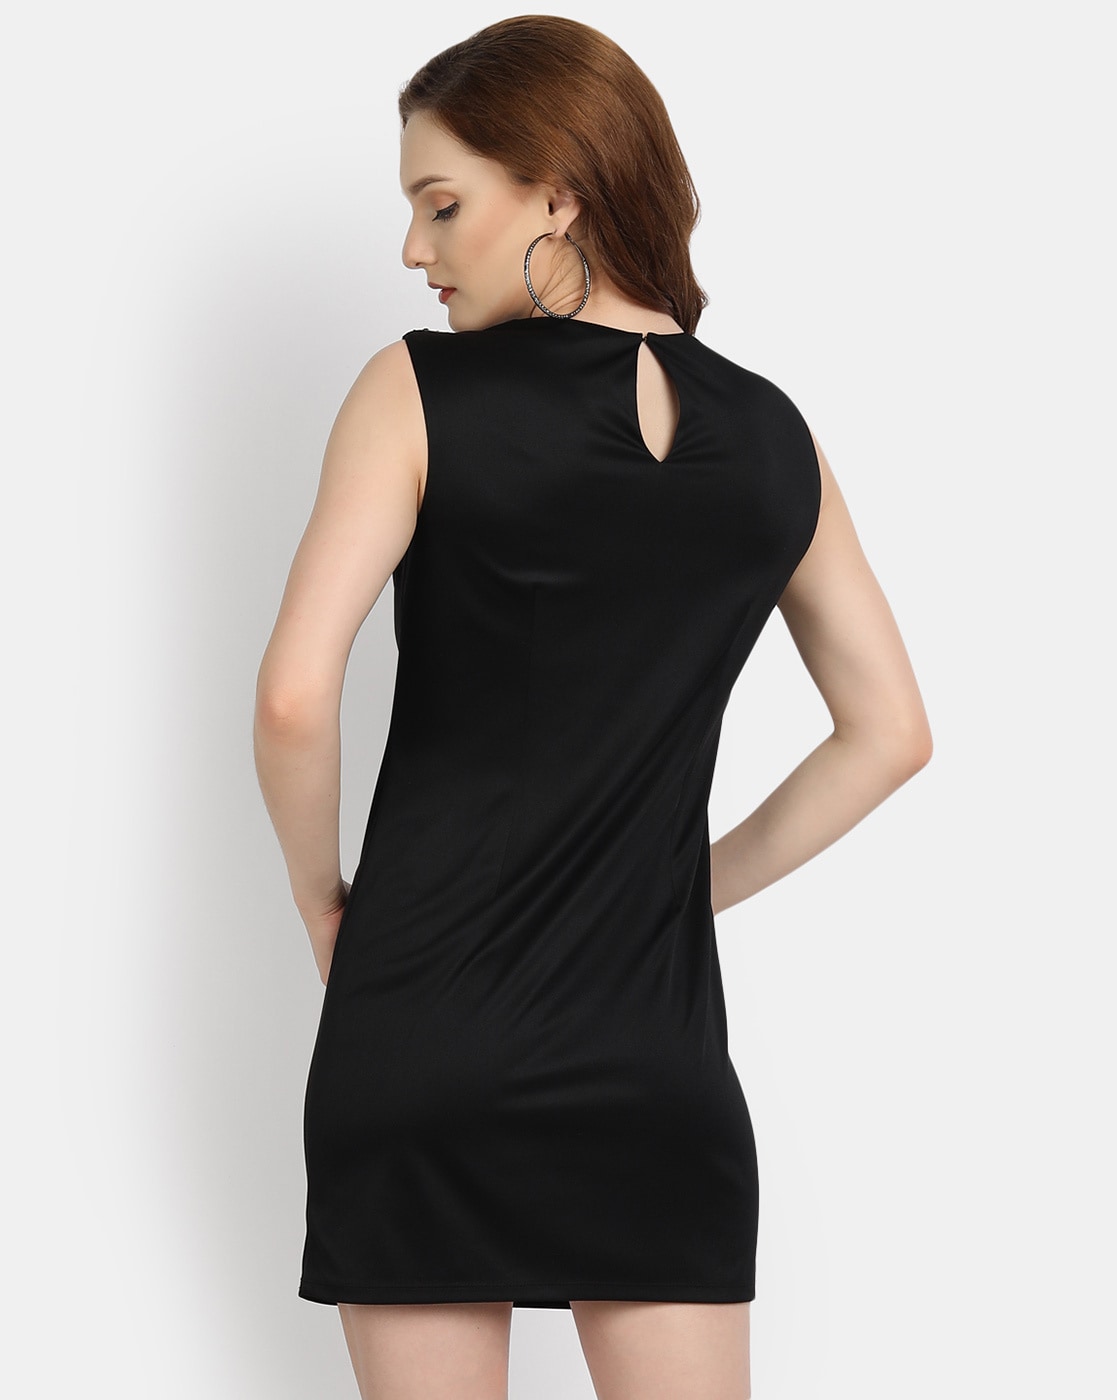 Stylish Shoulder Strap Mini Dress - Black - WHATBAE | Pink dress fashion,  Cute dresses for party, Cute black dress